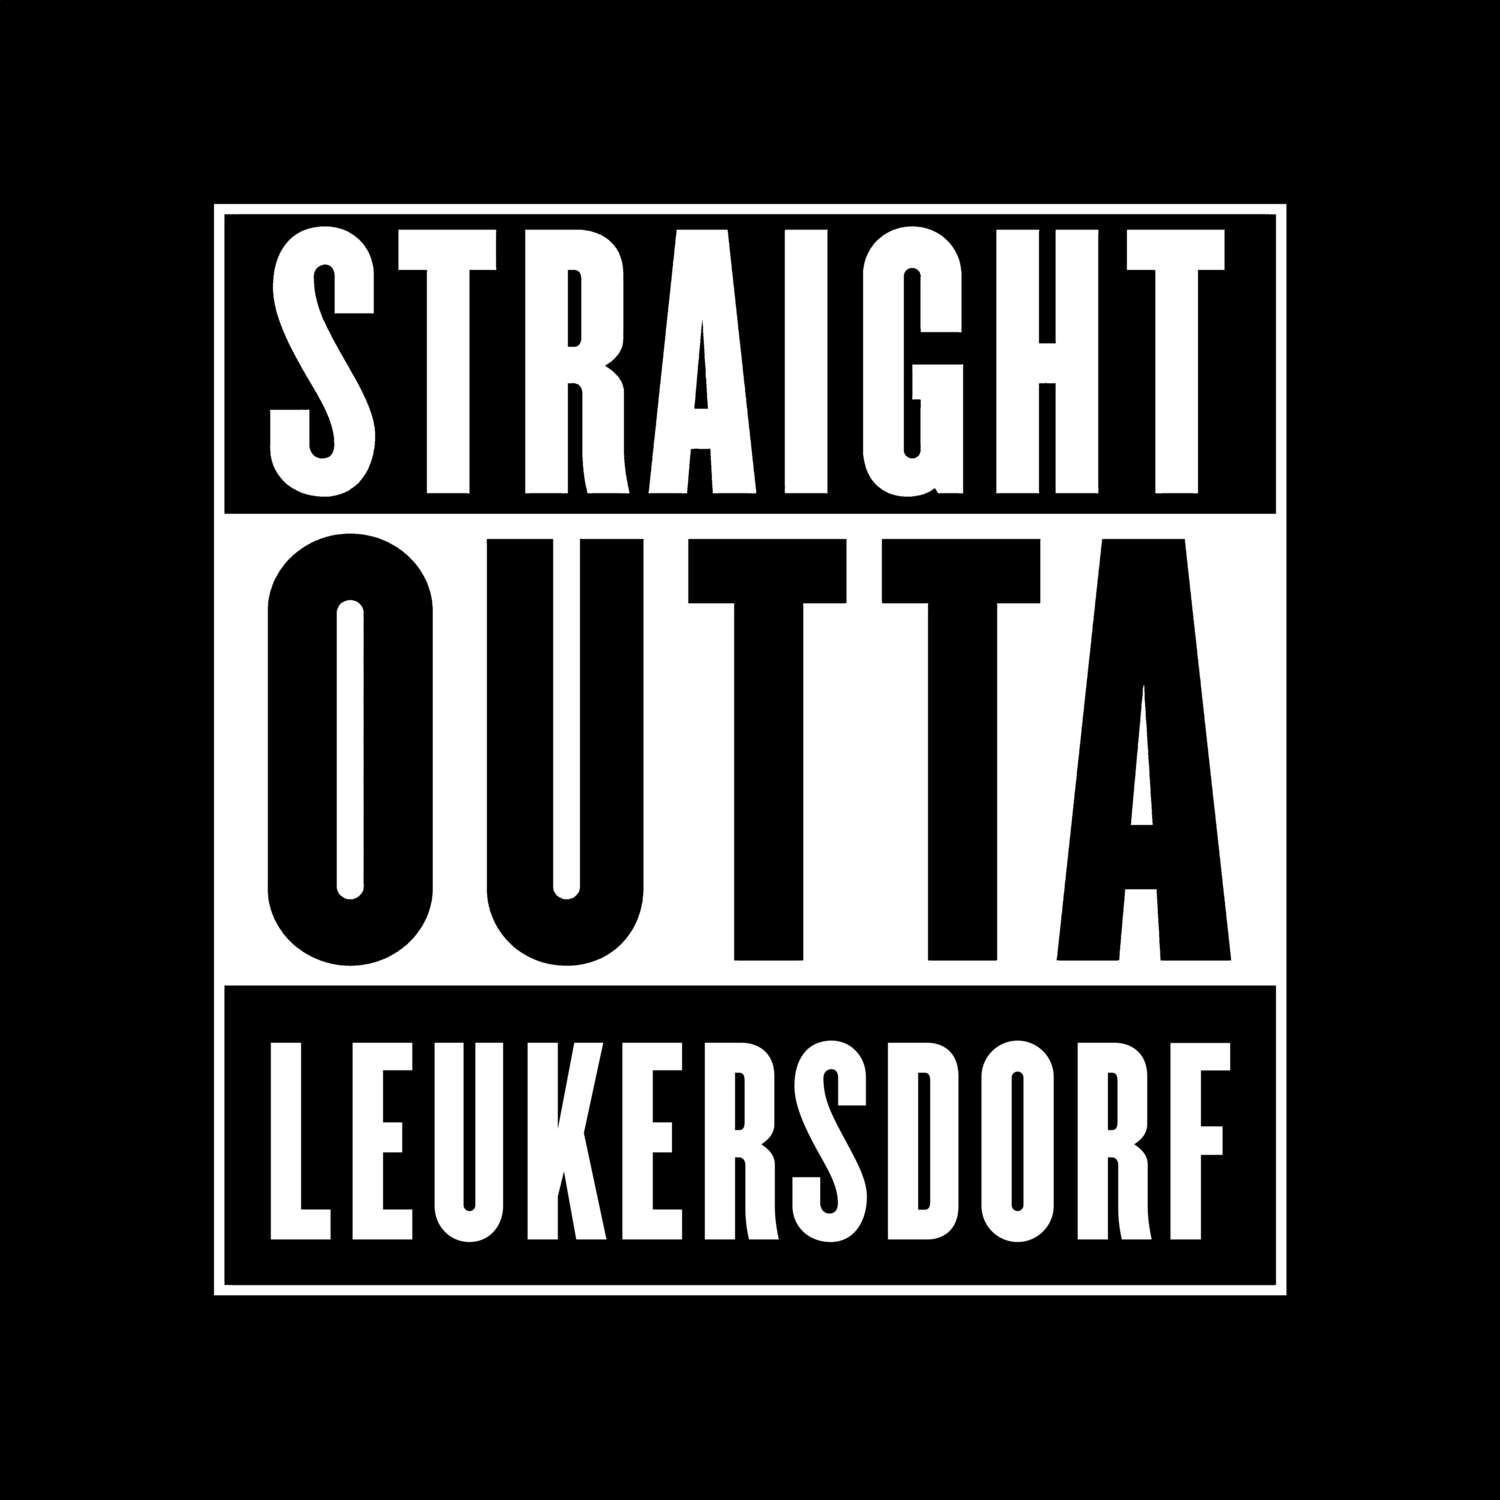 Leukersdorf T-Shirt »Straight Outta«